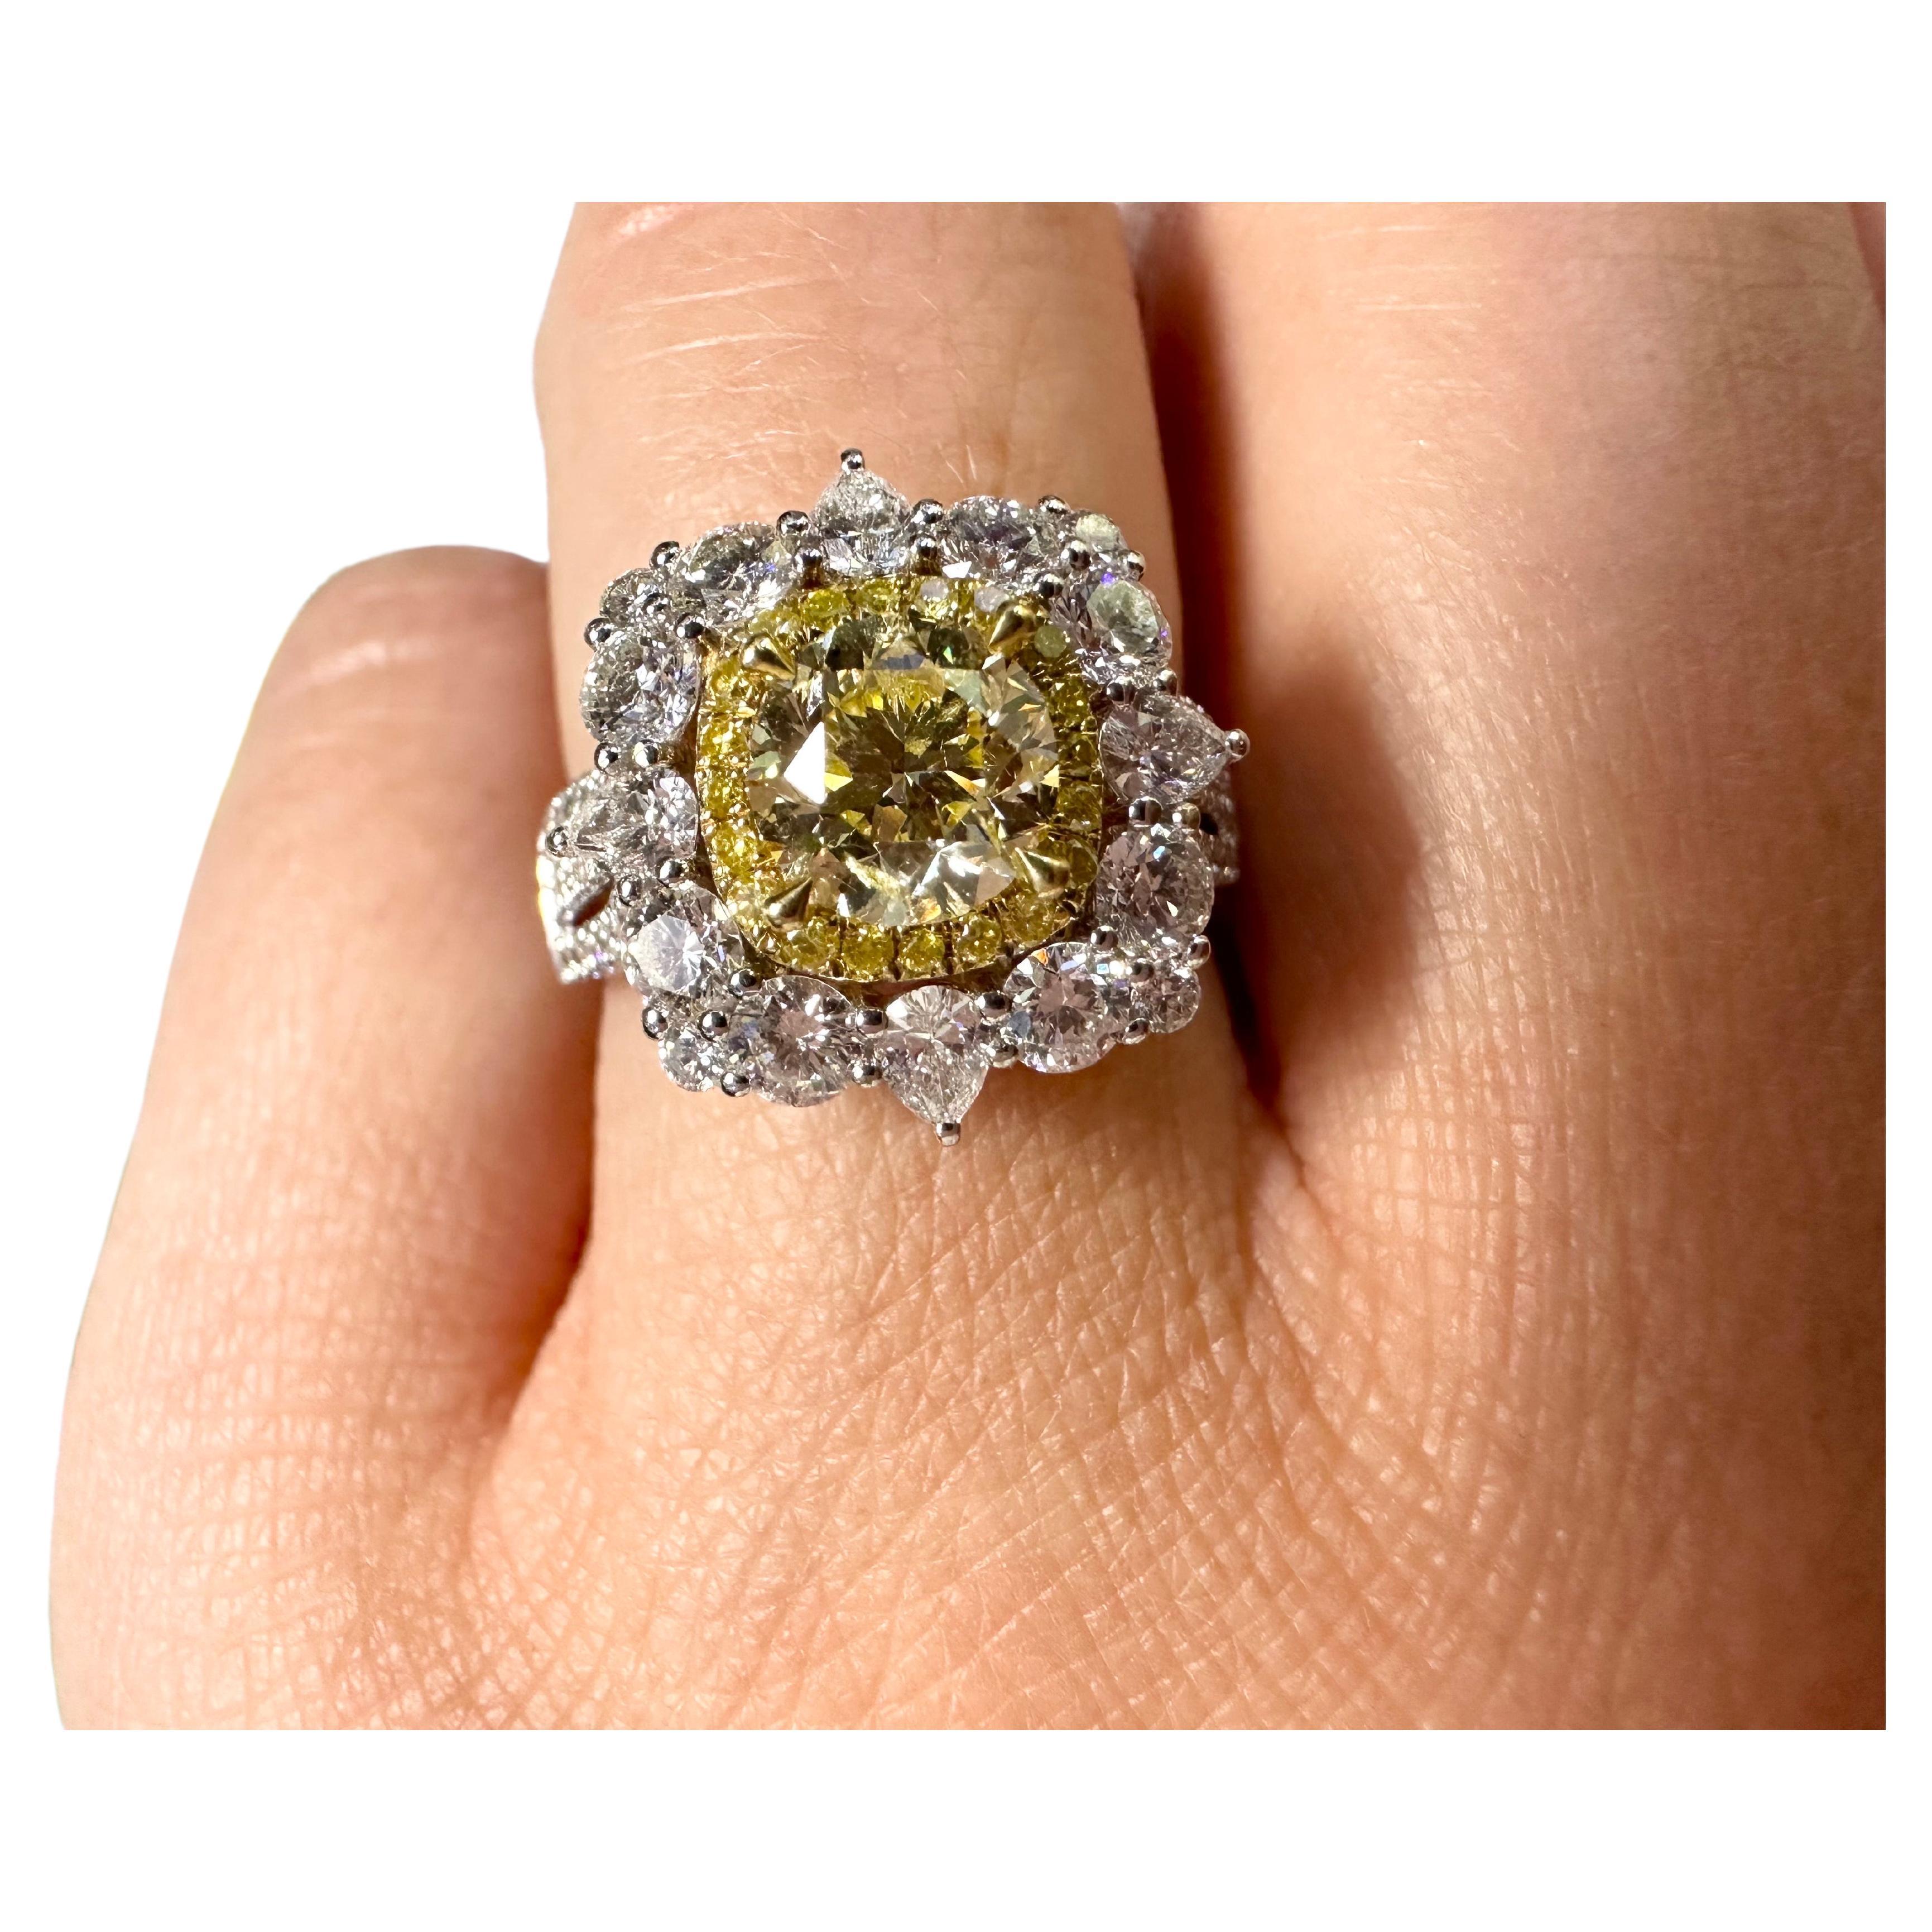 Yellow diamond engagement ring 1ct GIA certified diamond